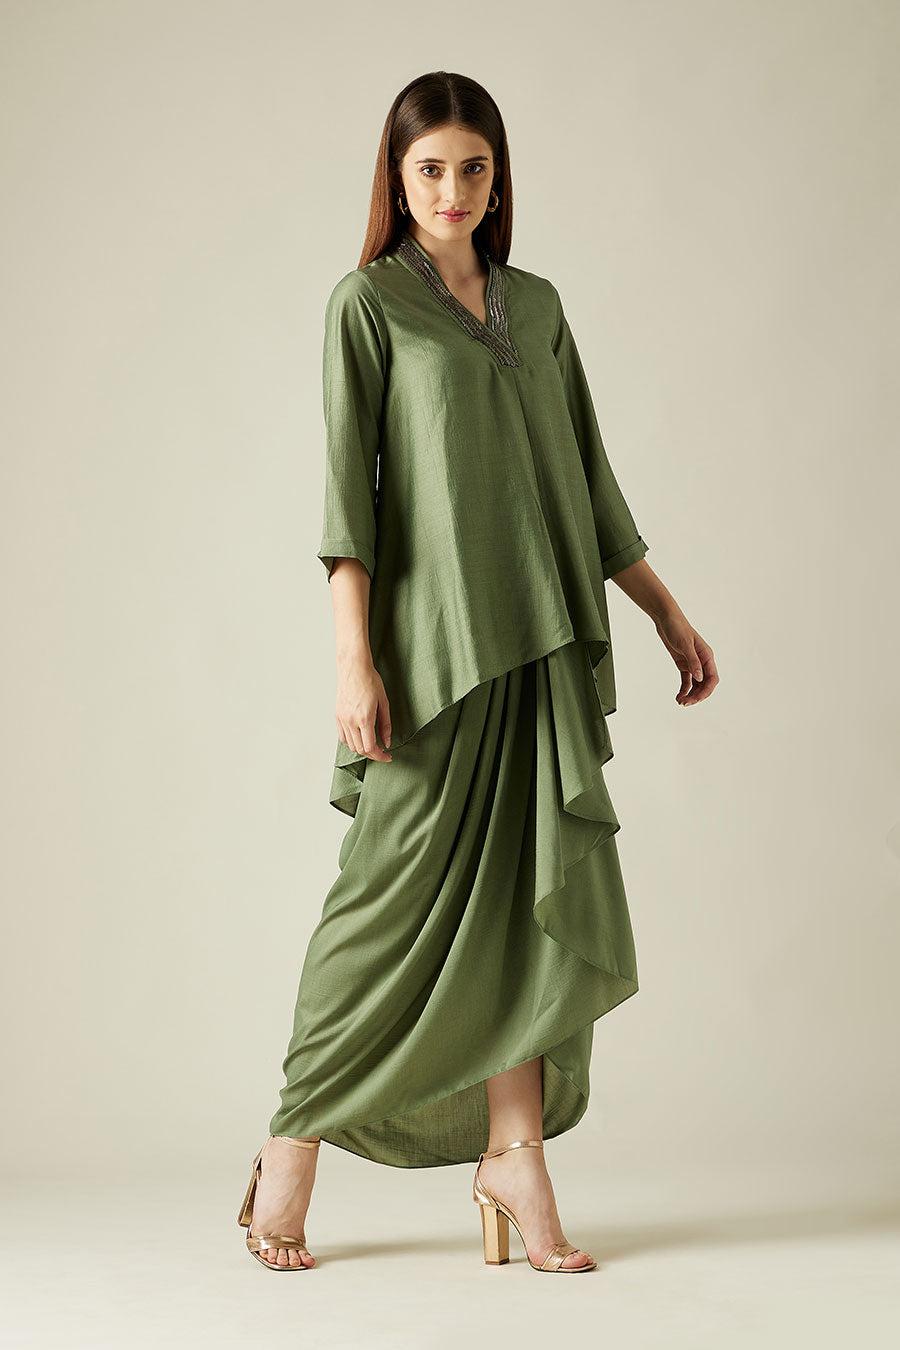 Fern Green Tunic & Drape Skirt Co-Ord Set